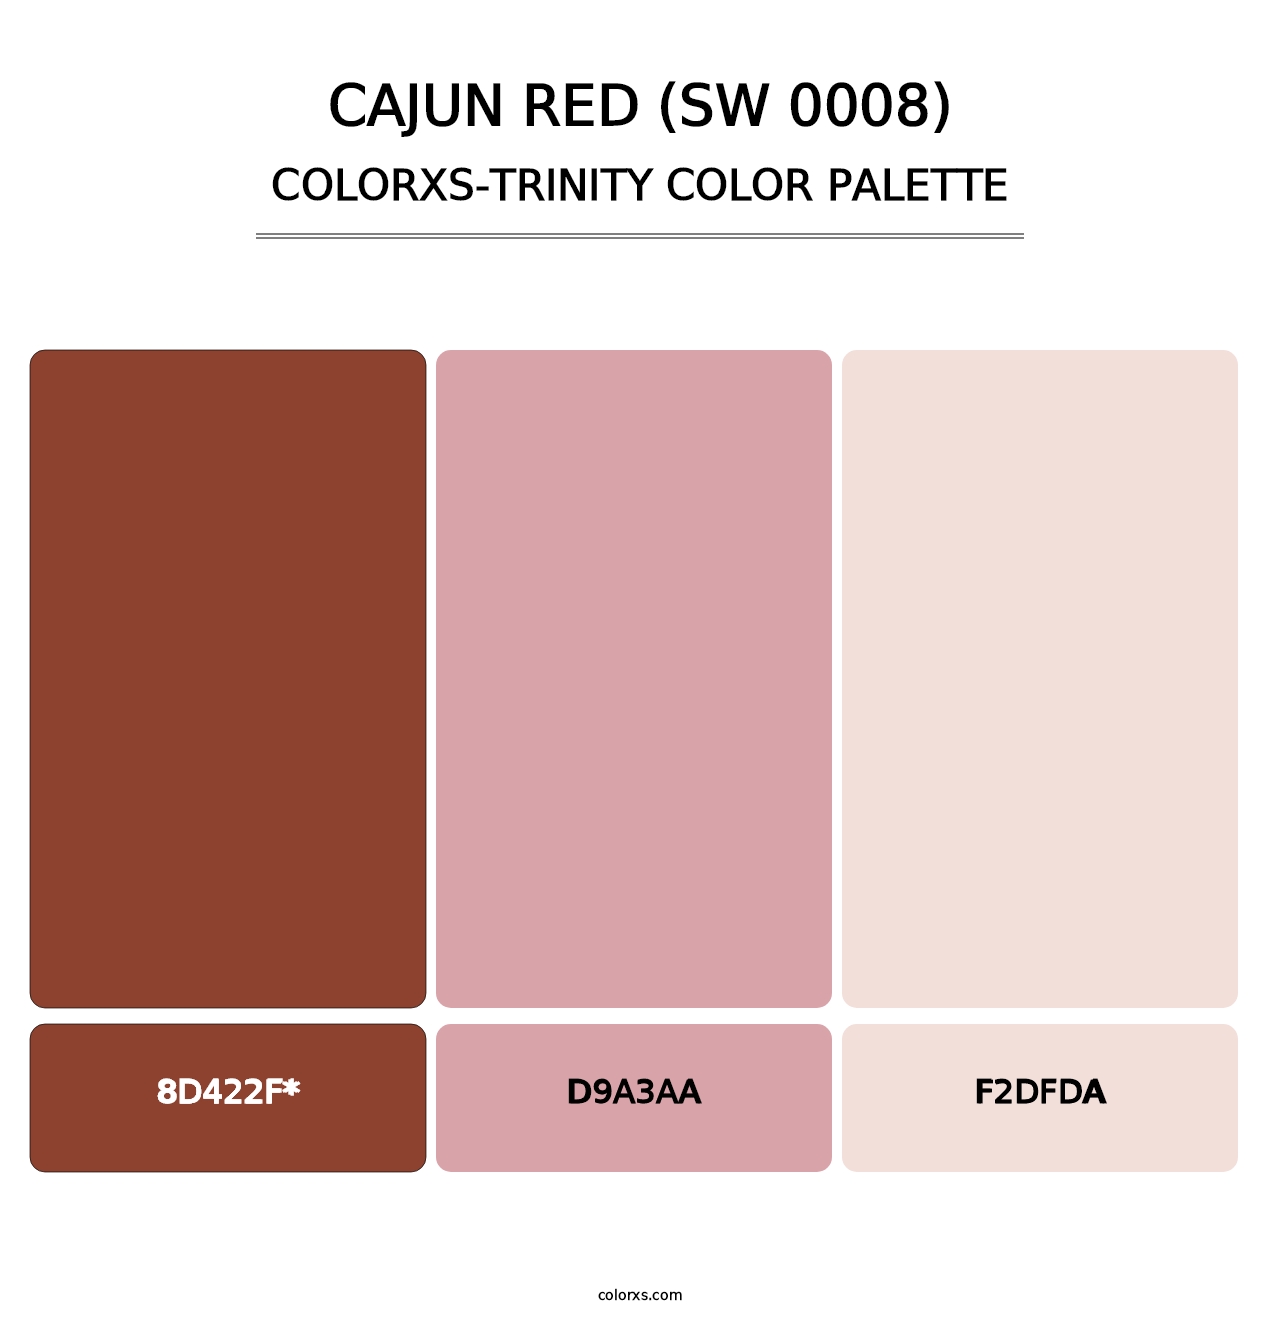 Cajun Red (SW 0008) - Colorxs Trinity Palette